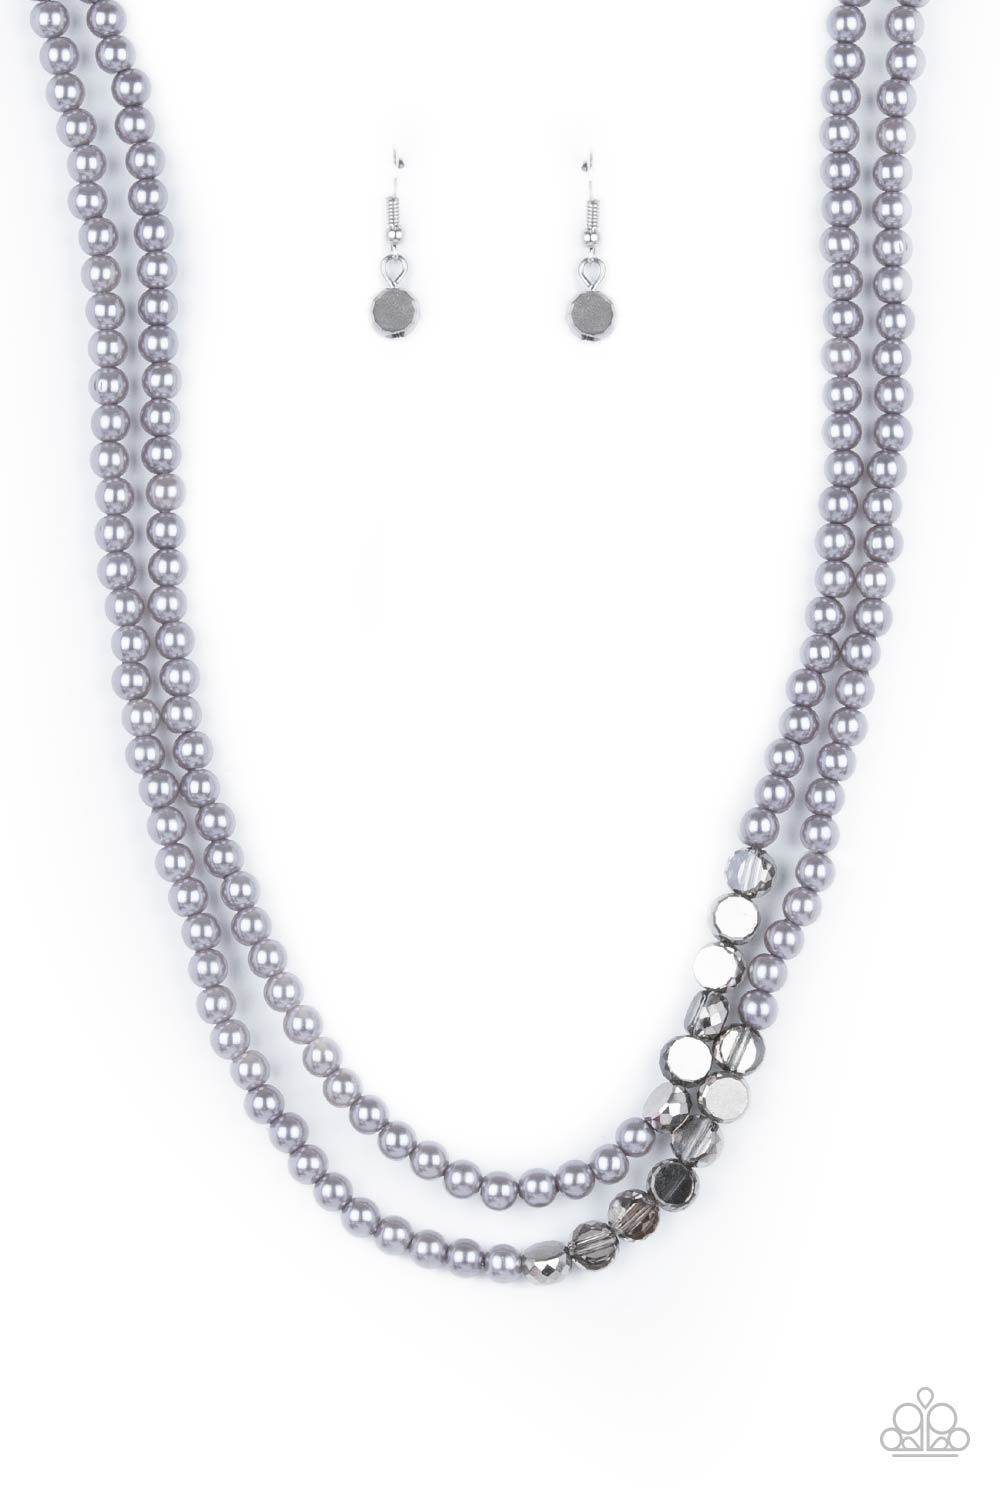 Poshly Petite - Silver Necklace Set - Princess Glam Shop